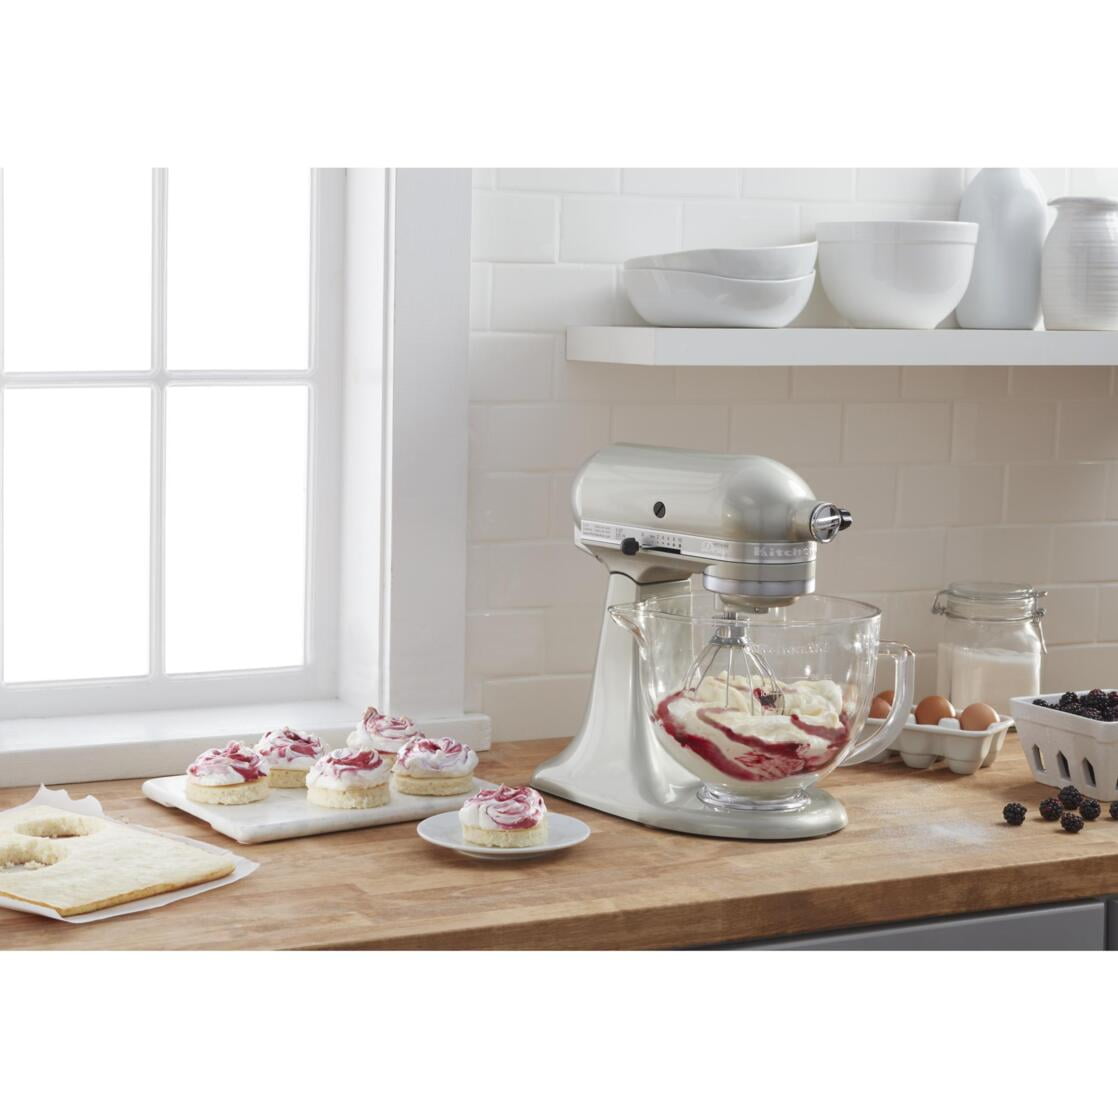 KitchenAid KSM155GBFP Artisan Designer Series Tilt-Head Stand Mixer Frosted  Pearl White KSM155GBFP - Best Buy